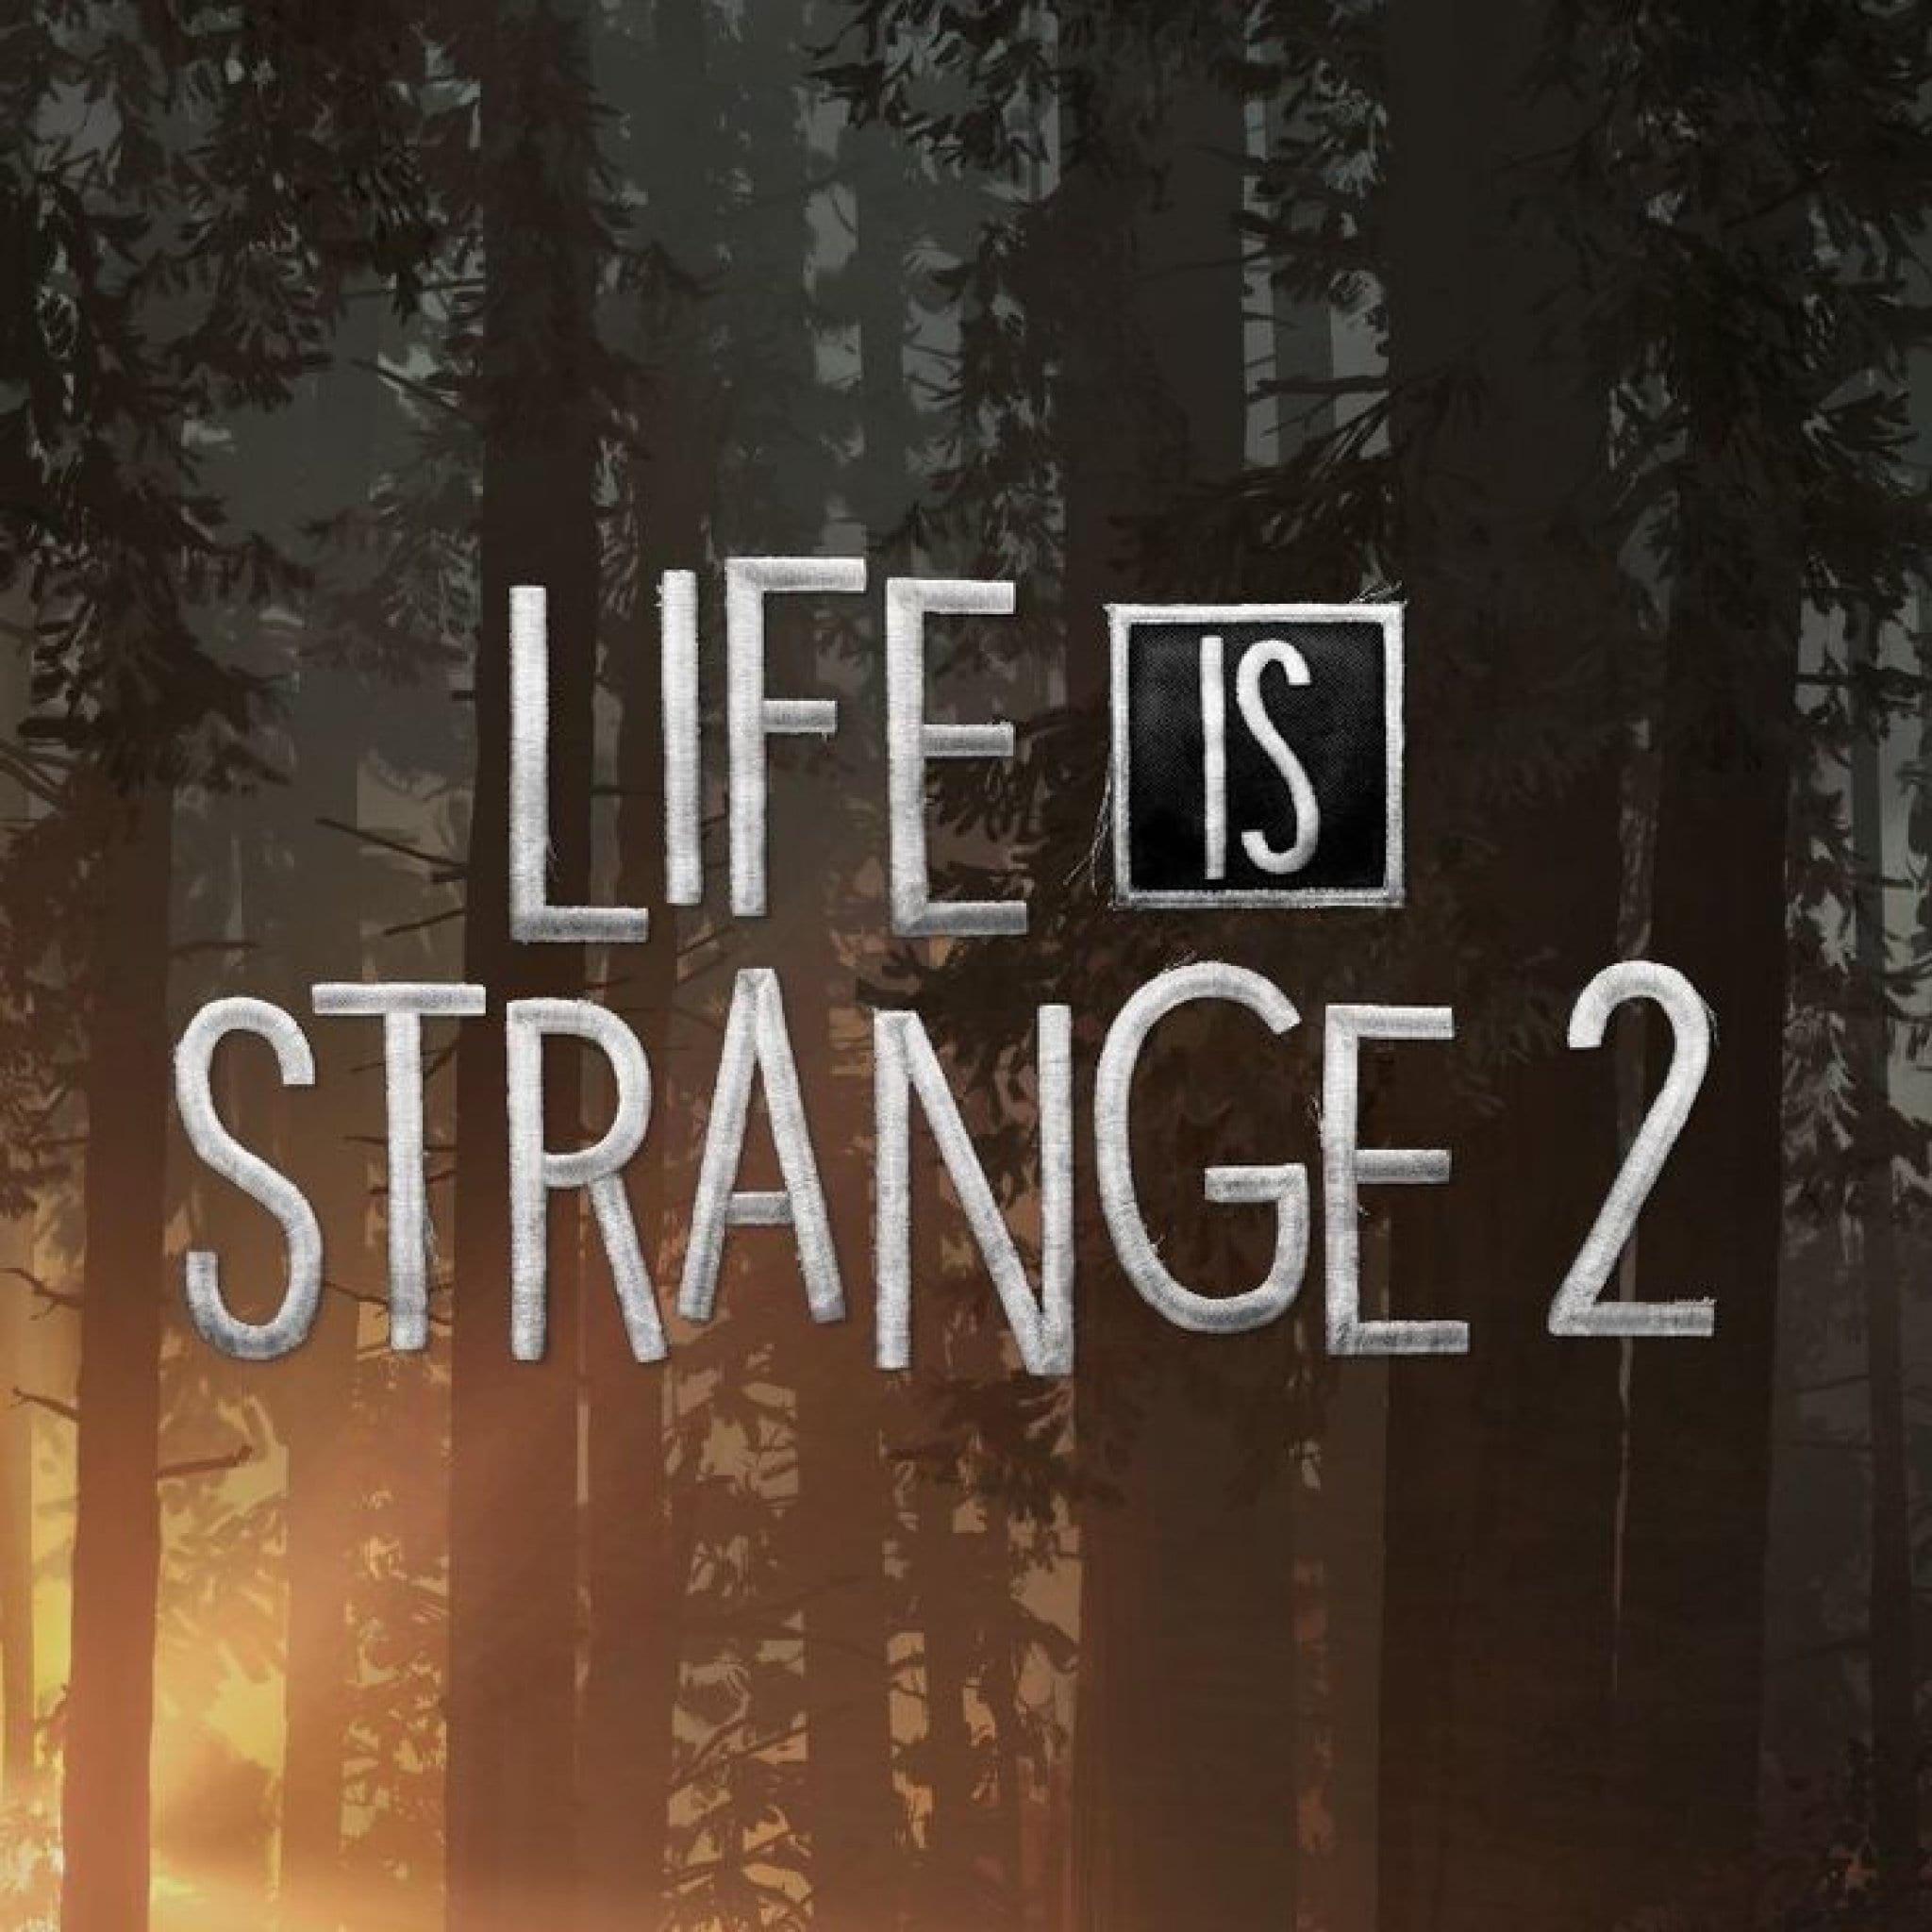 Life s not being lived. Life is Strange. Life is Strange 2 логотип. Лайв из Стрендж надпись. Life is Strange 2 значки.